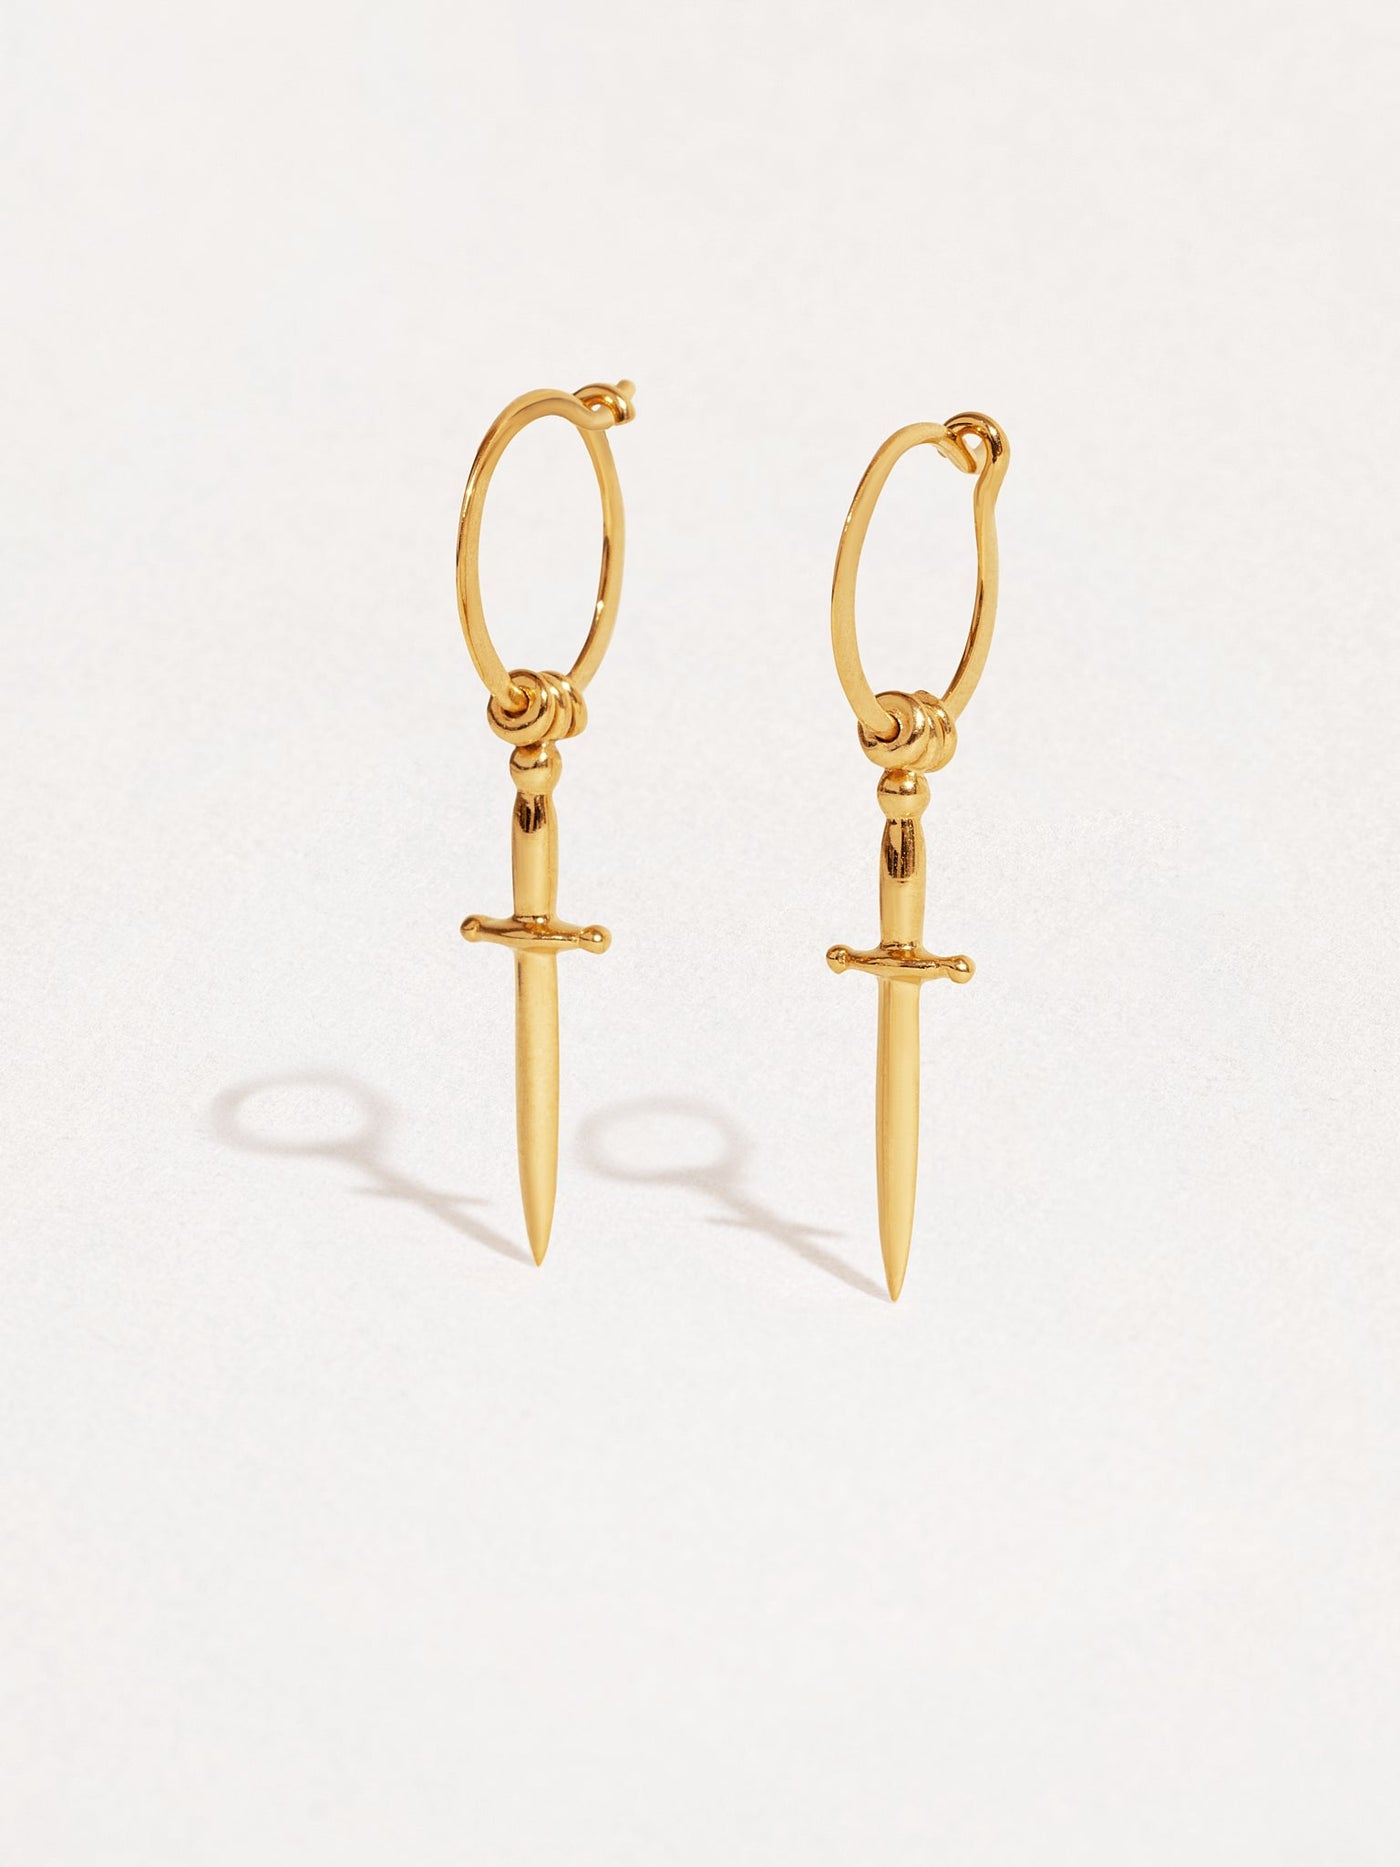 Dalma Silver Dagger Charm Earrings - 24K Gold PlatedPairankorBackUpItemsLunai Jewelry